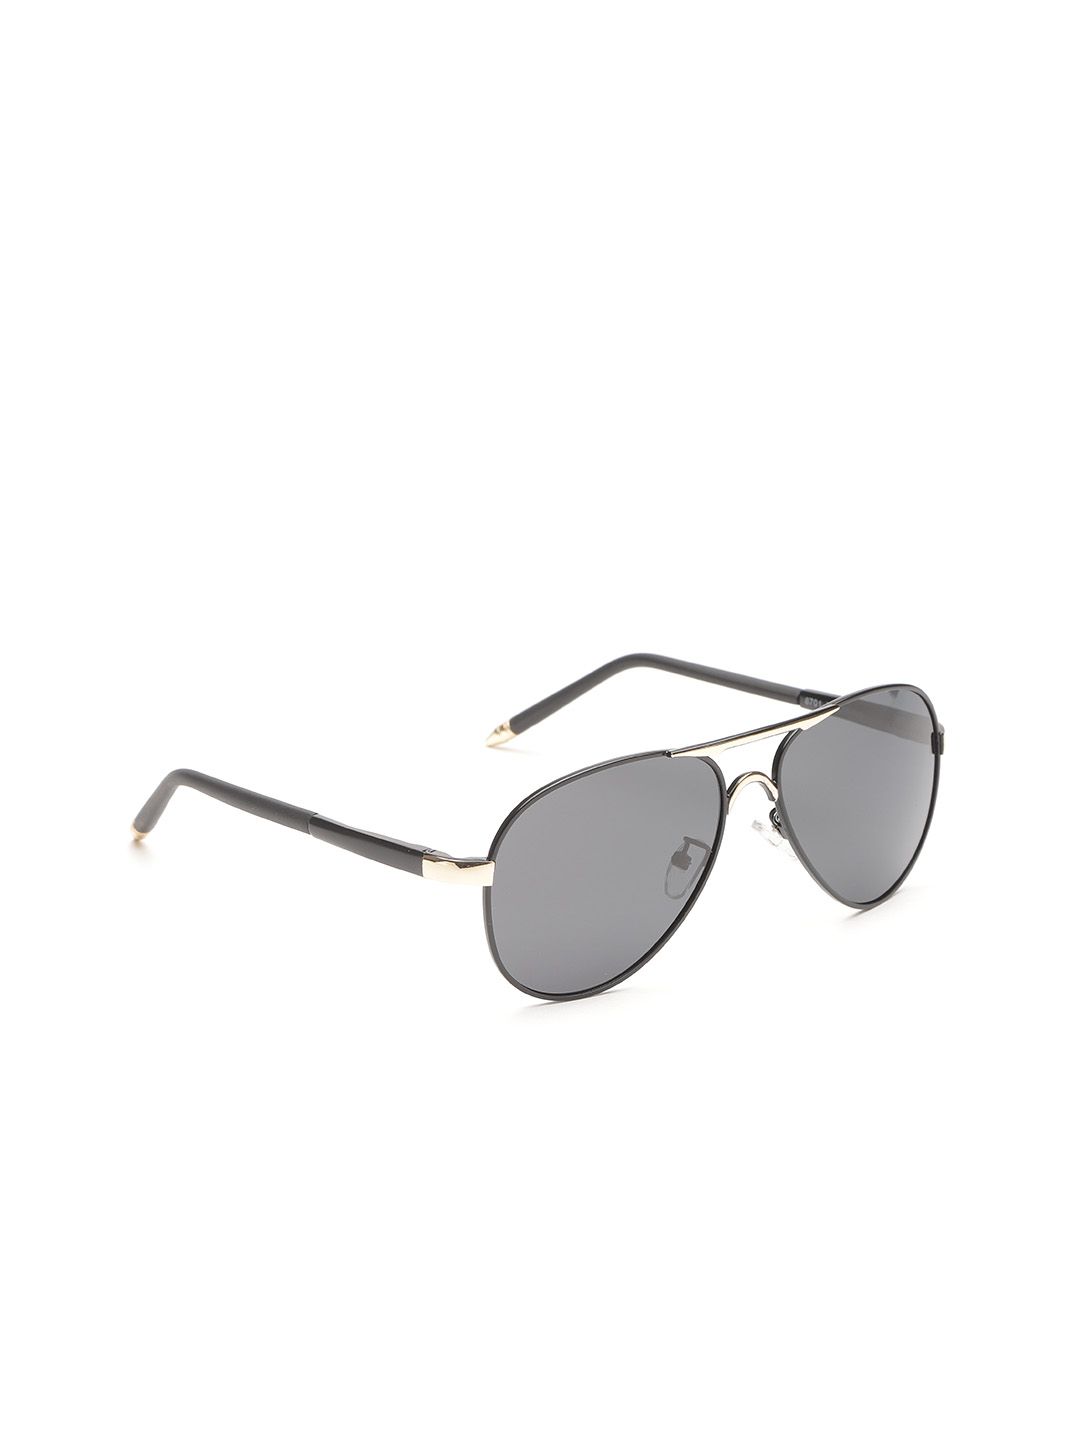 Carlton London Women UV Protected Aviator Sunglasses 8701-C2 Price in India